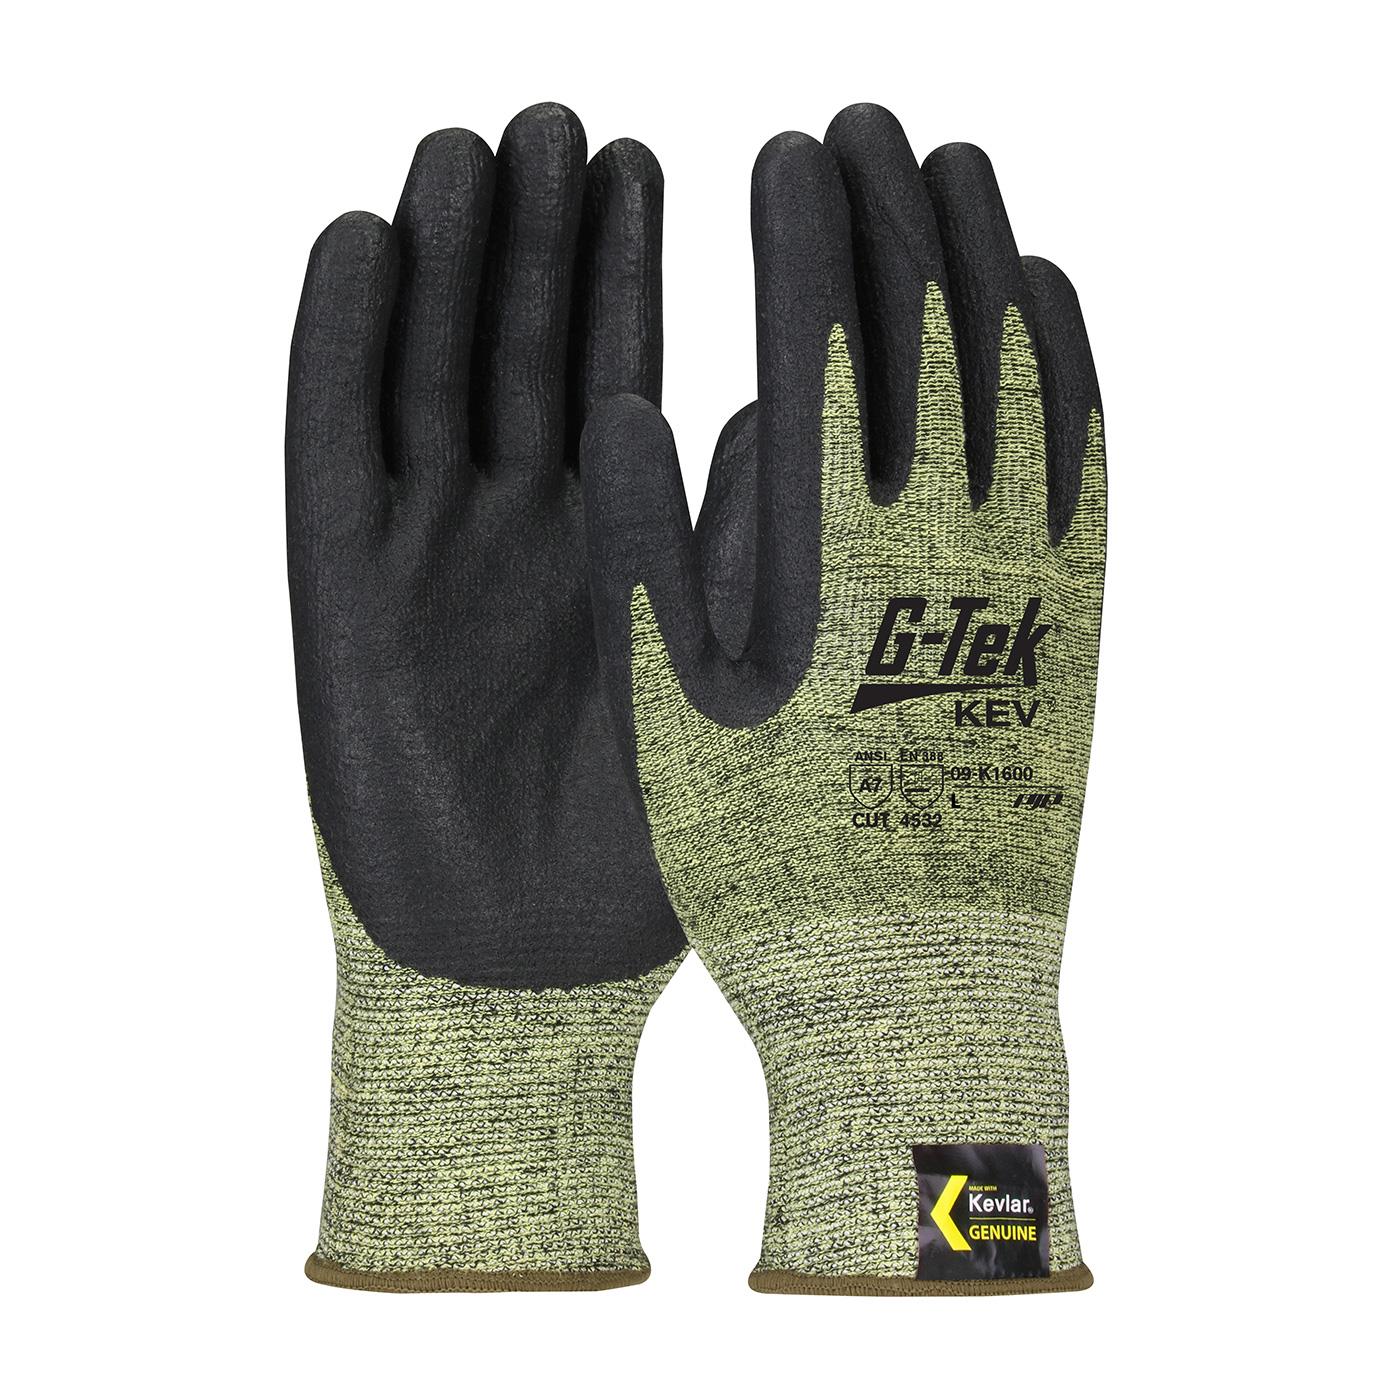 G-TEK KEV A7 FOAM NITRILE PALM COATED - Heat Resistant Gloves